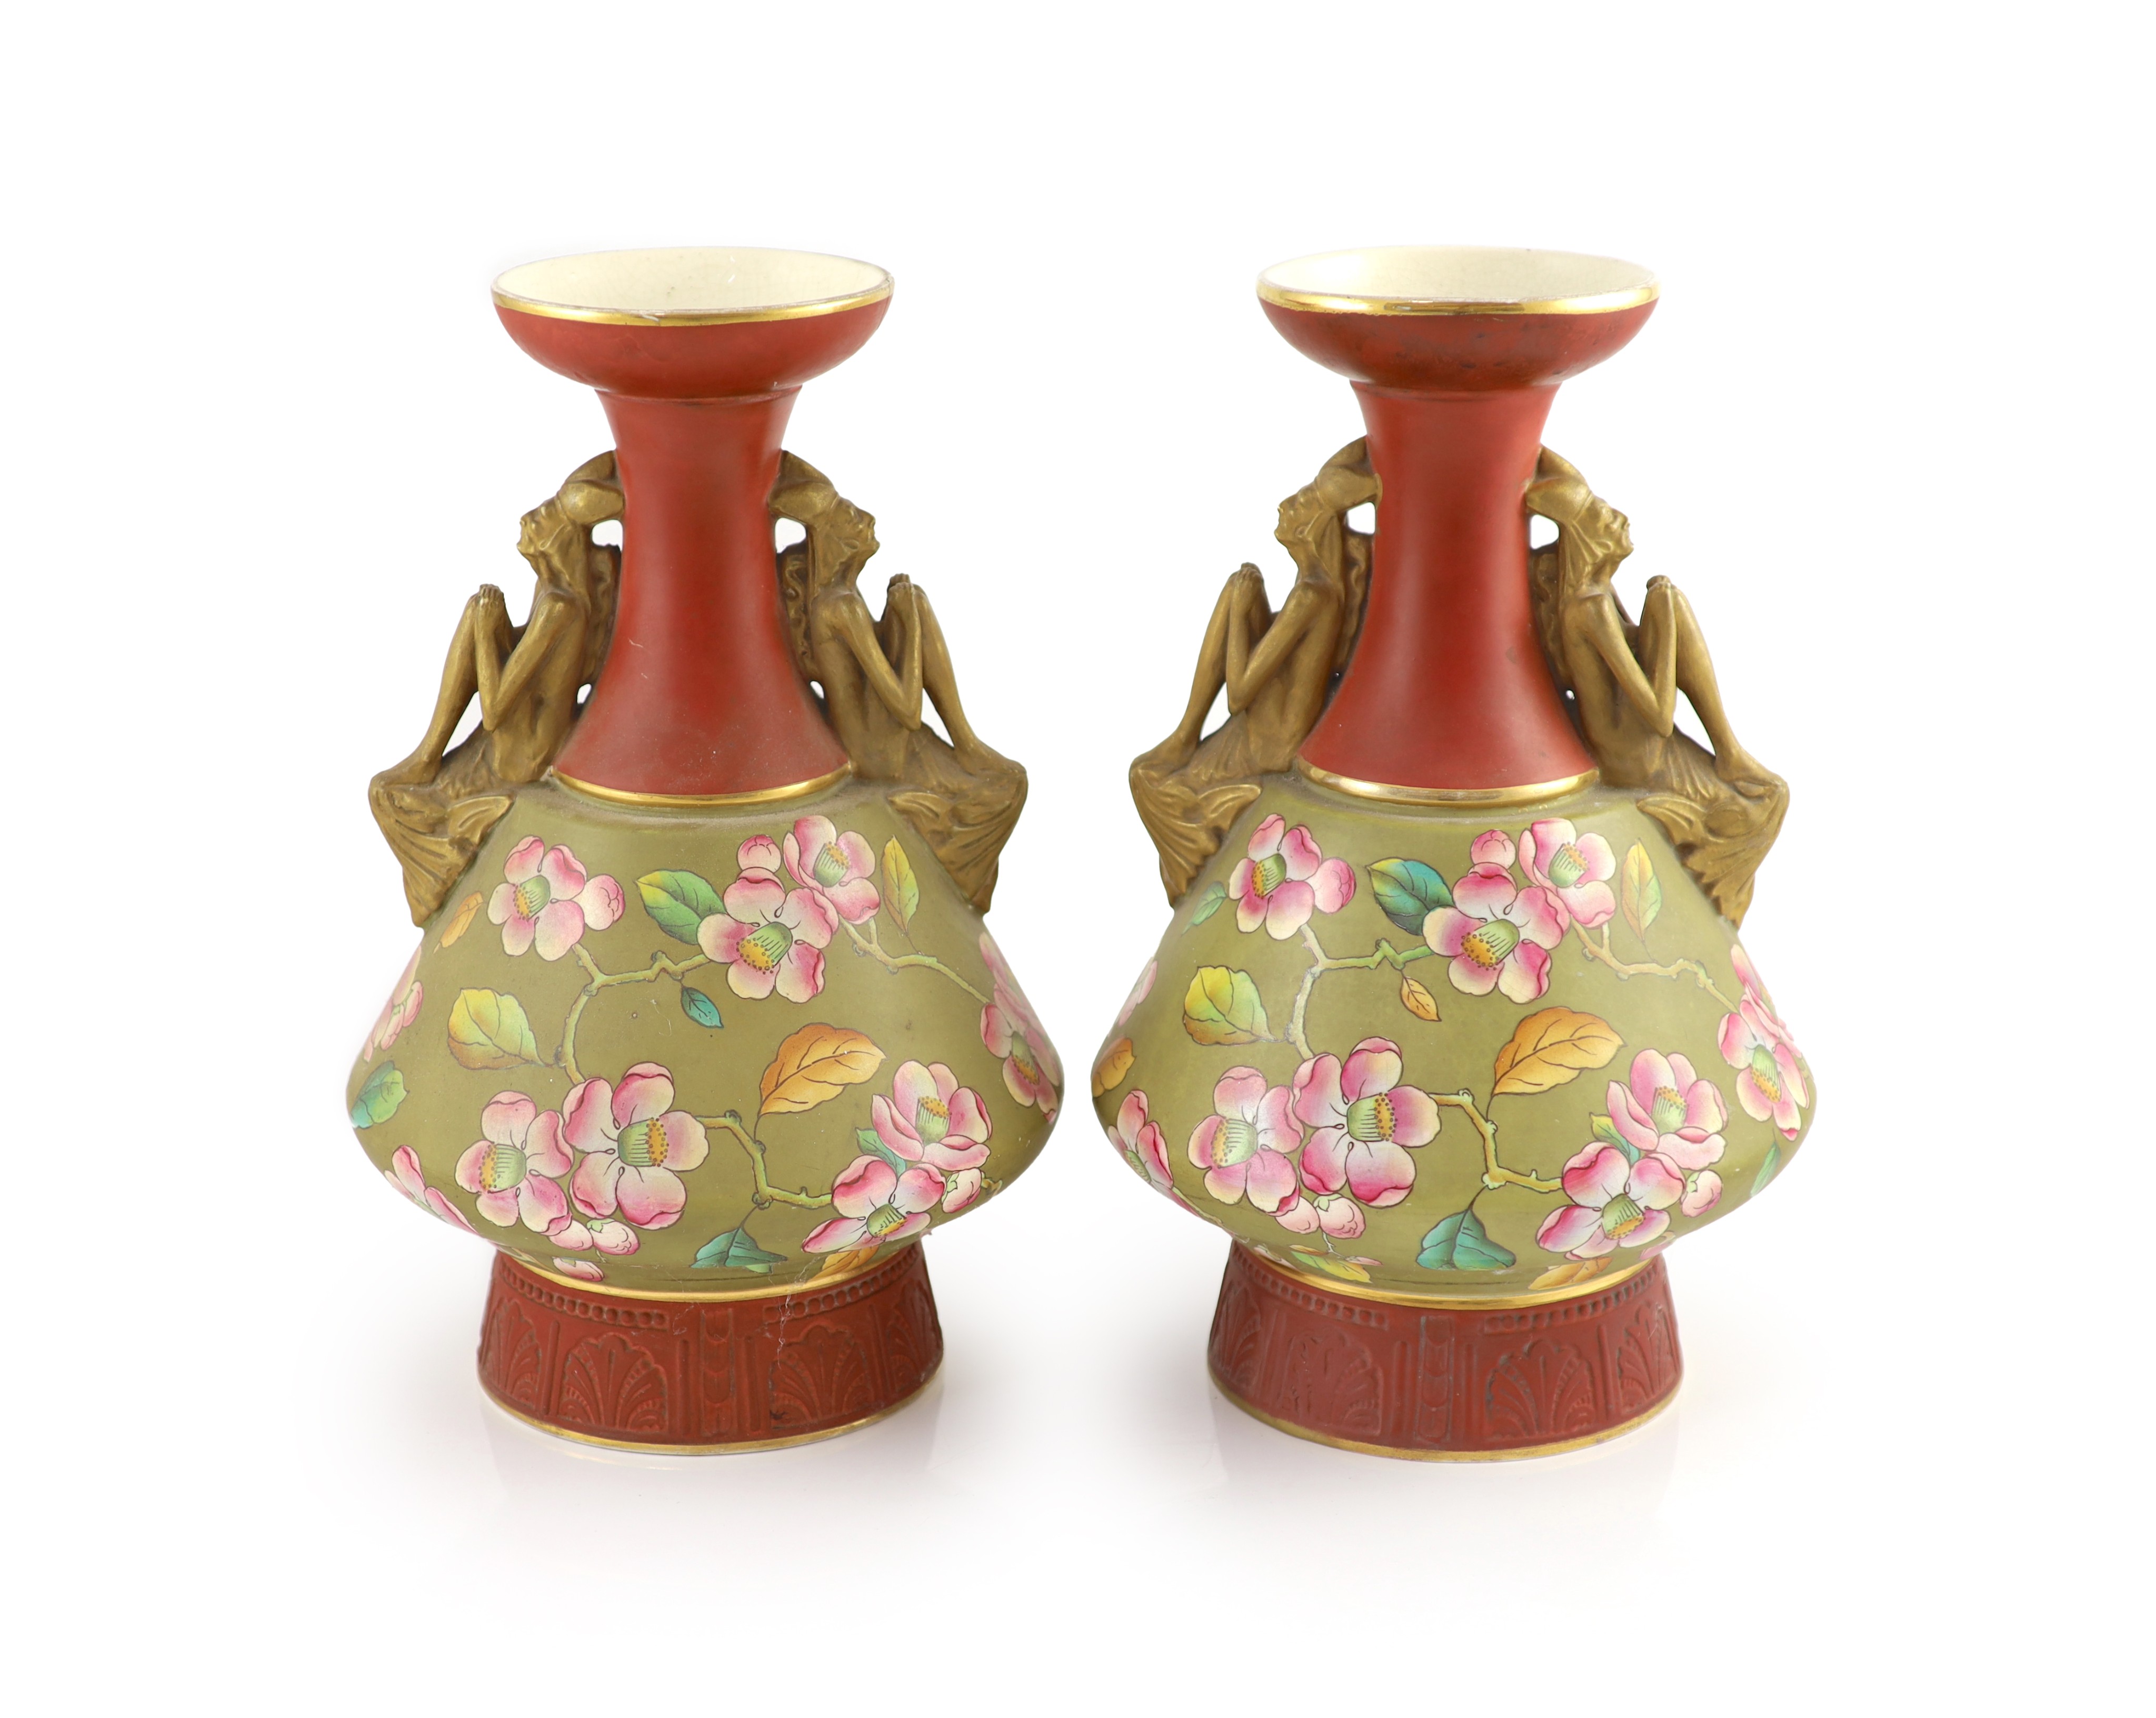 Christoper Dresser for Old Hall Earthenware Company Ltd, a pair of vases, c.1884, 36 cm high                                                                                                                                